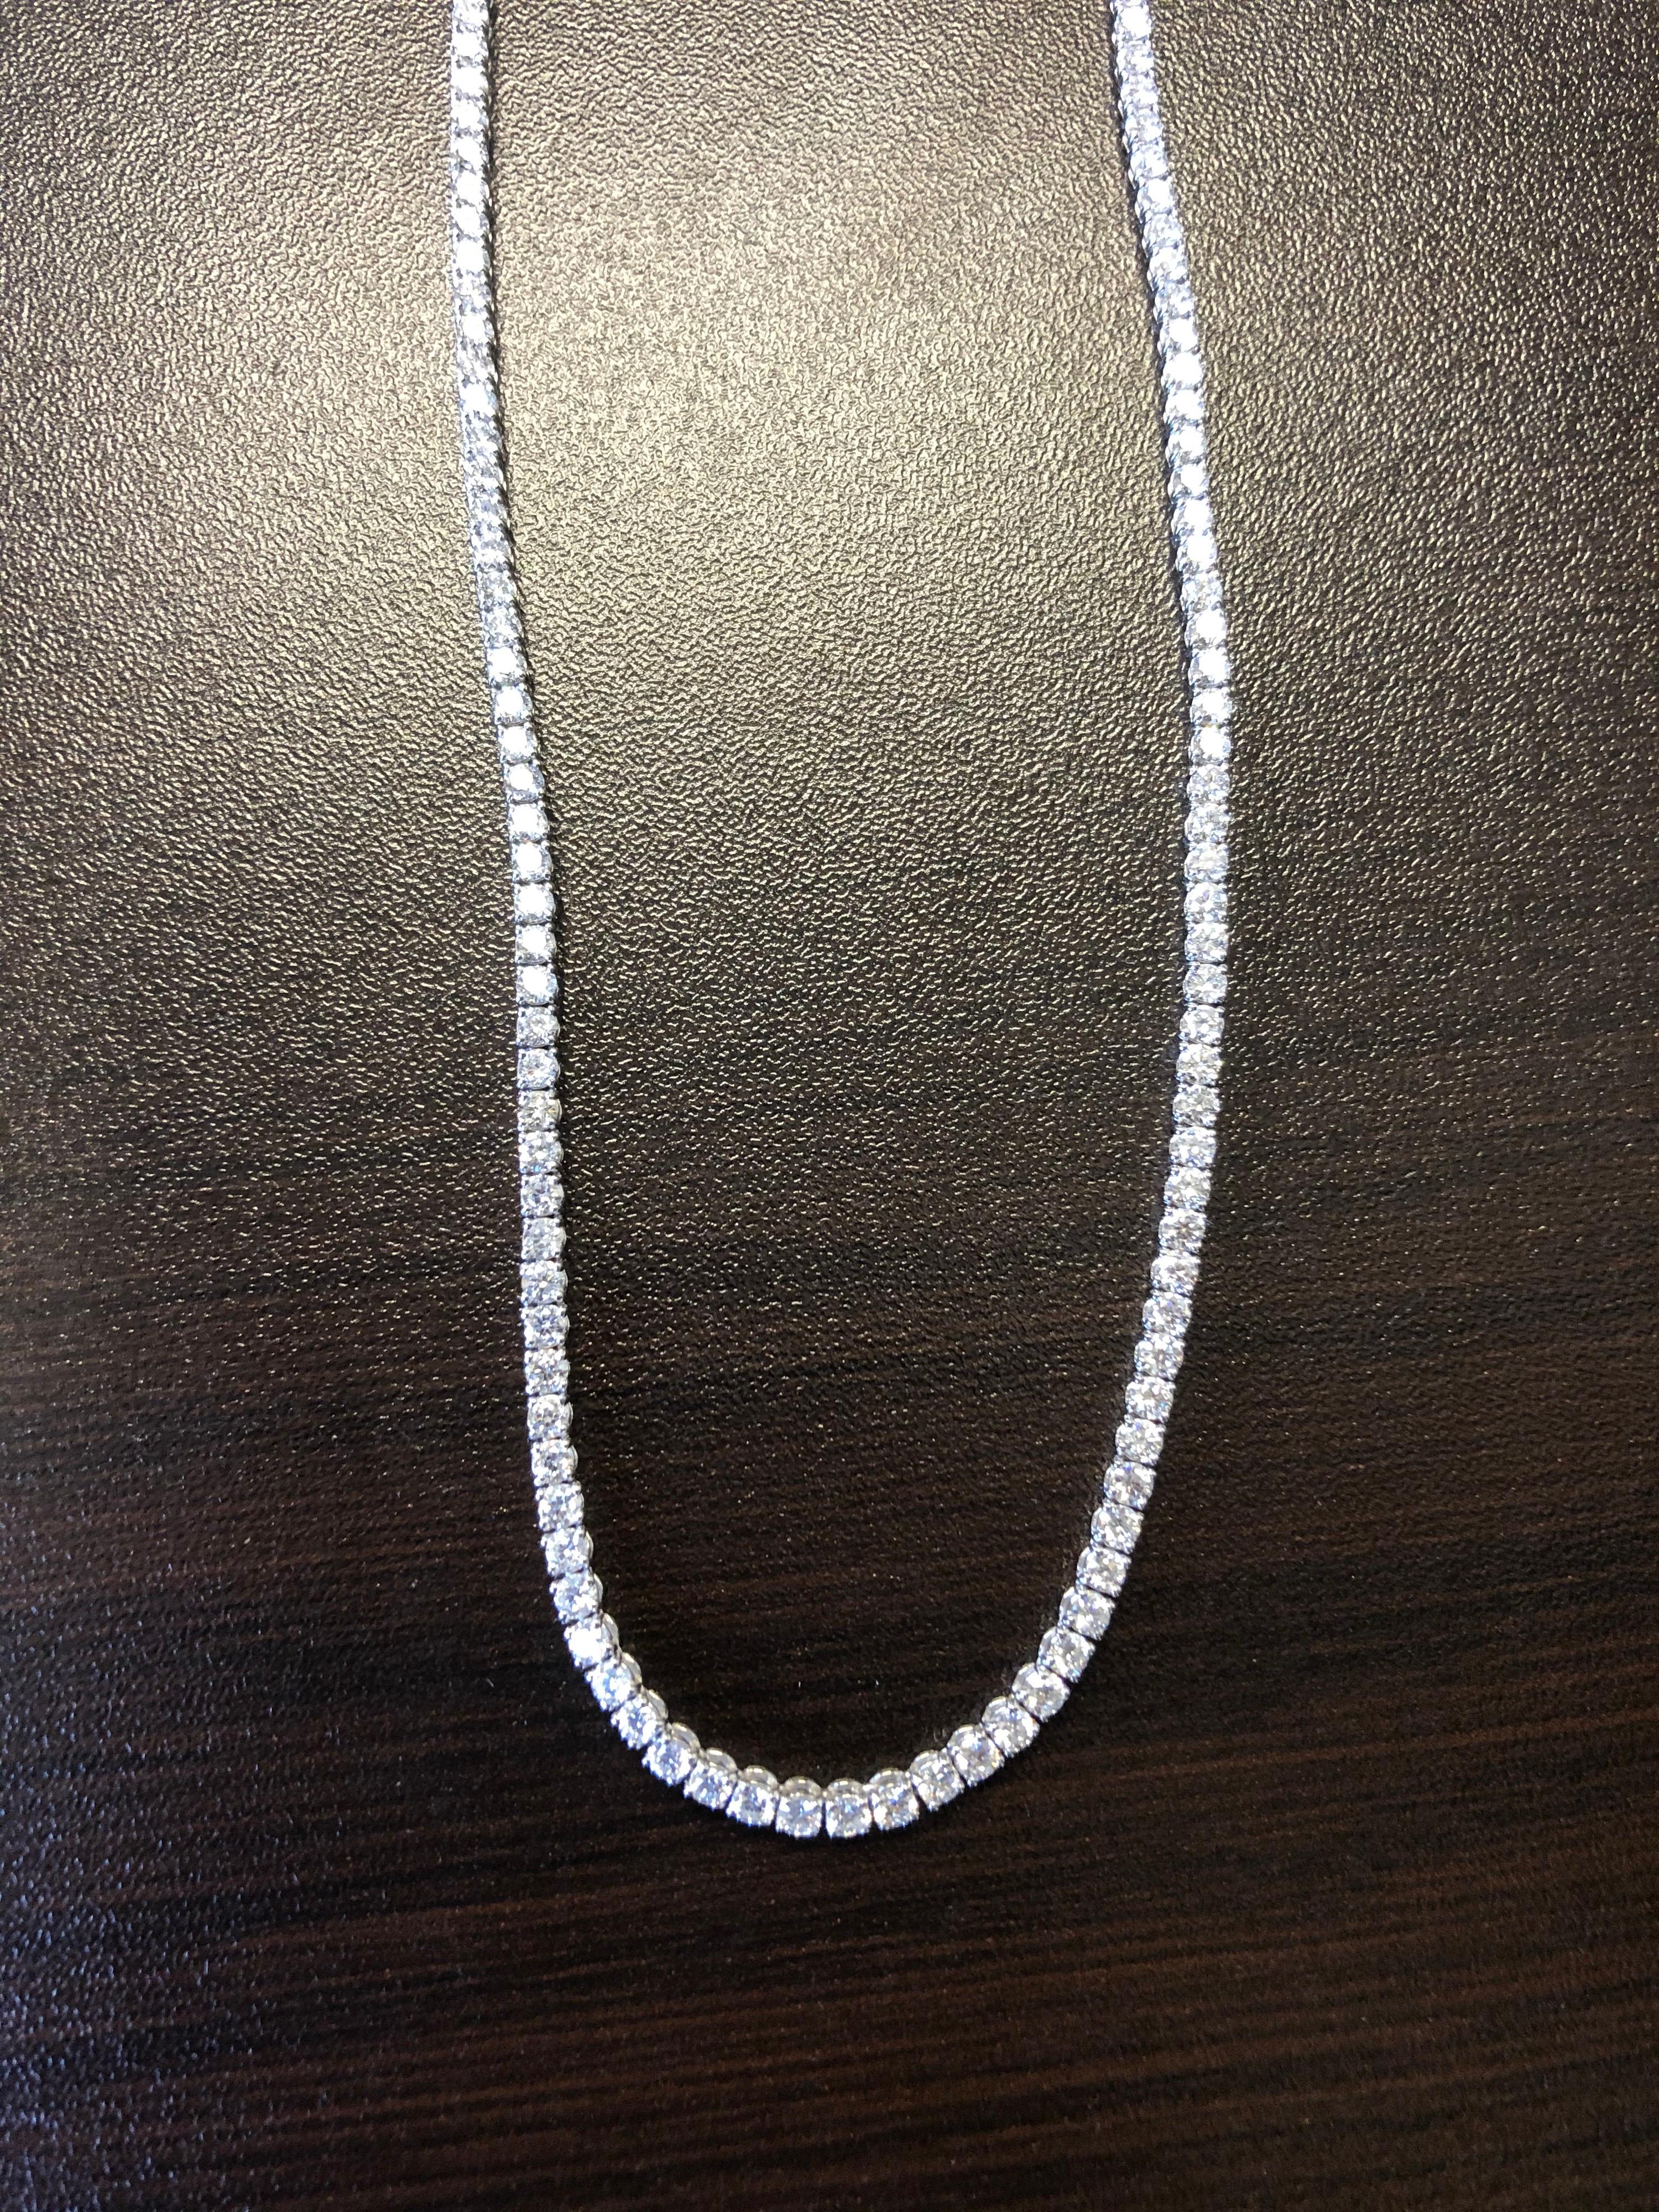 5 carat diamond tennis necklace